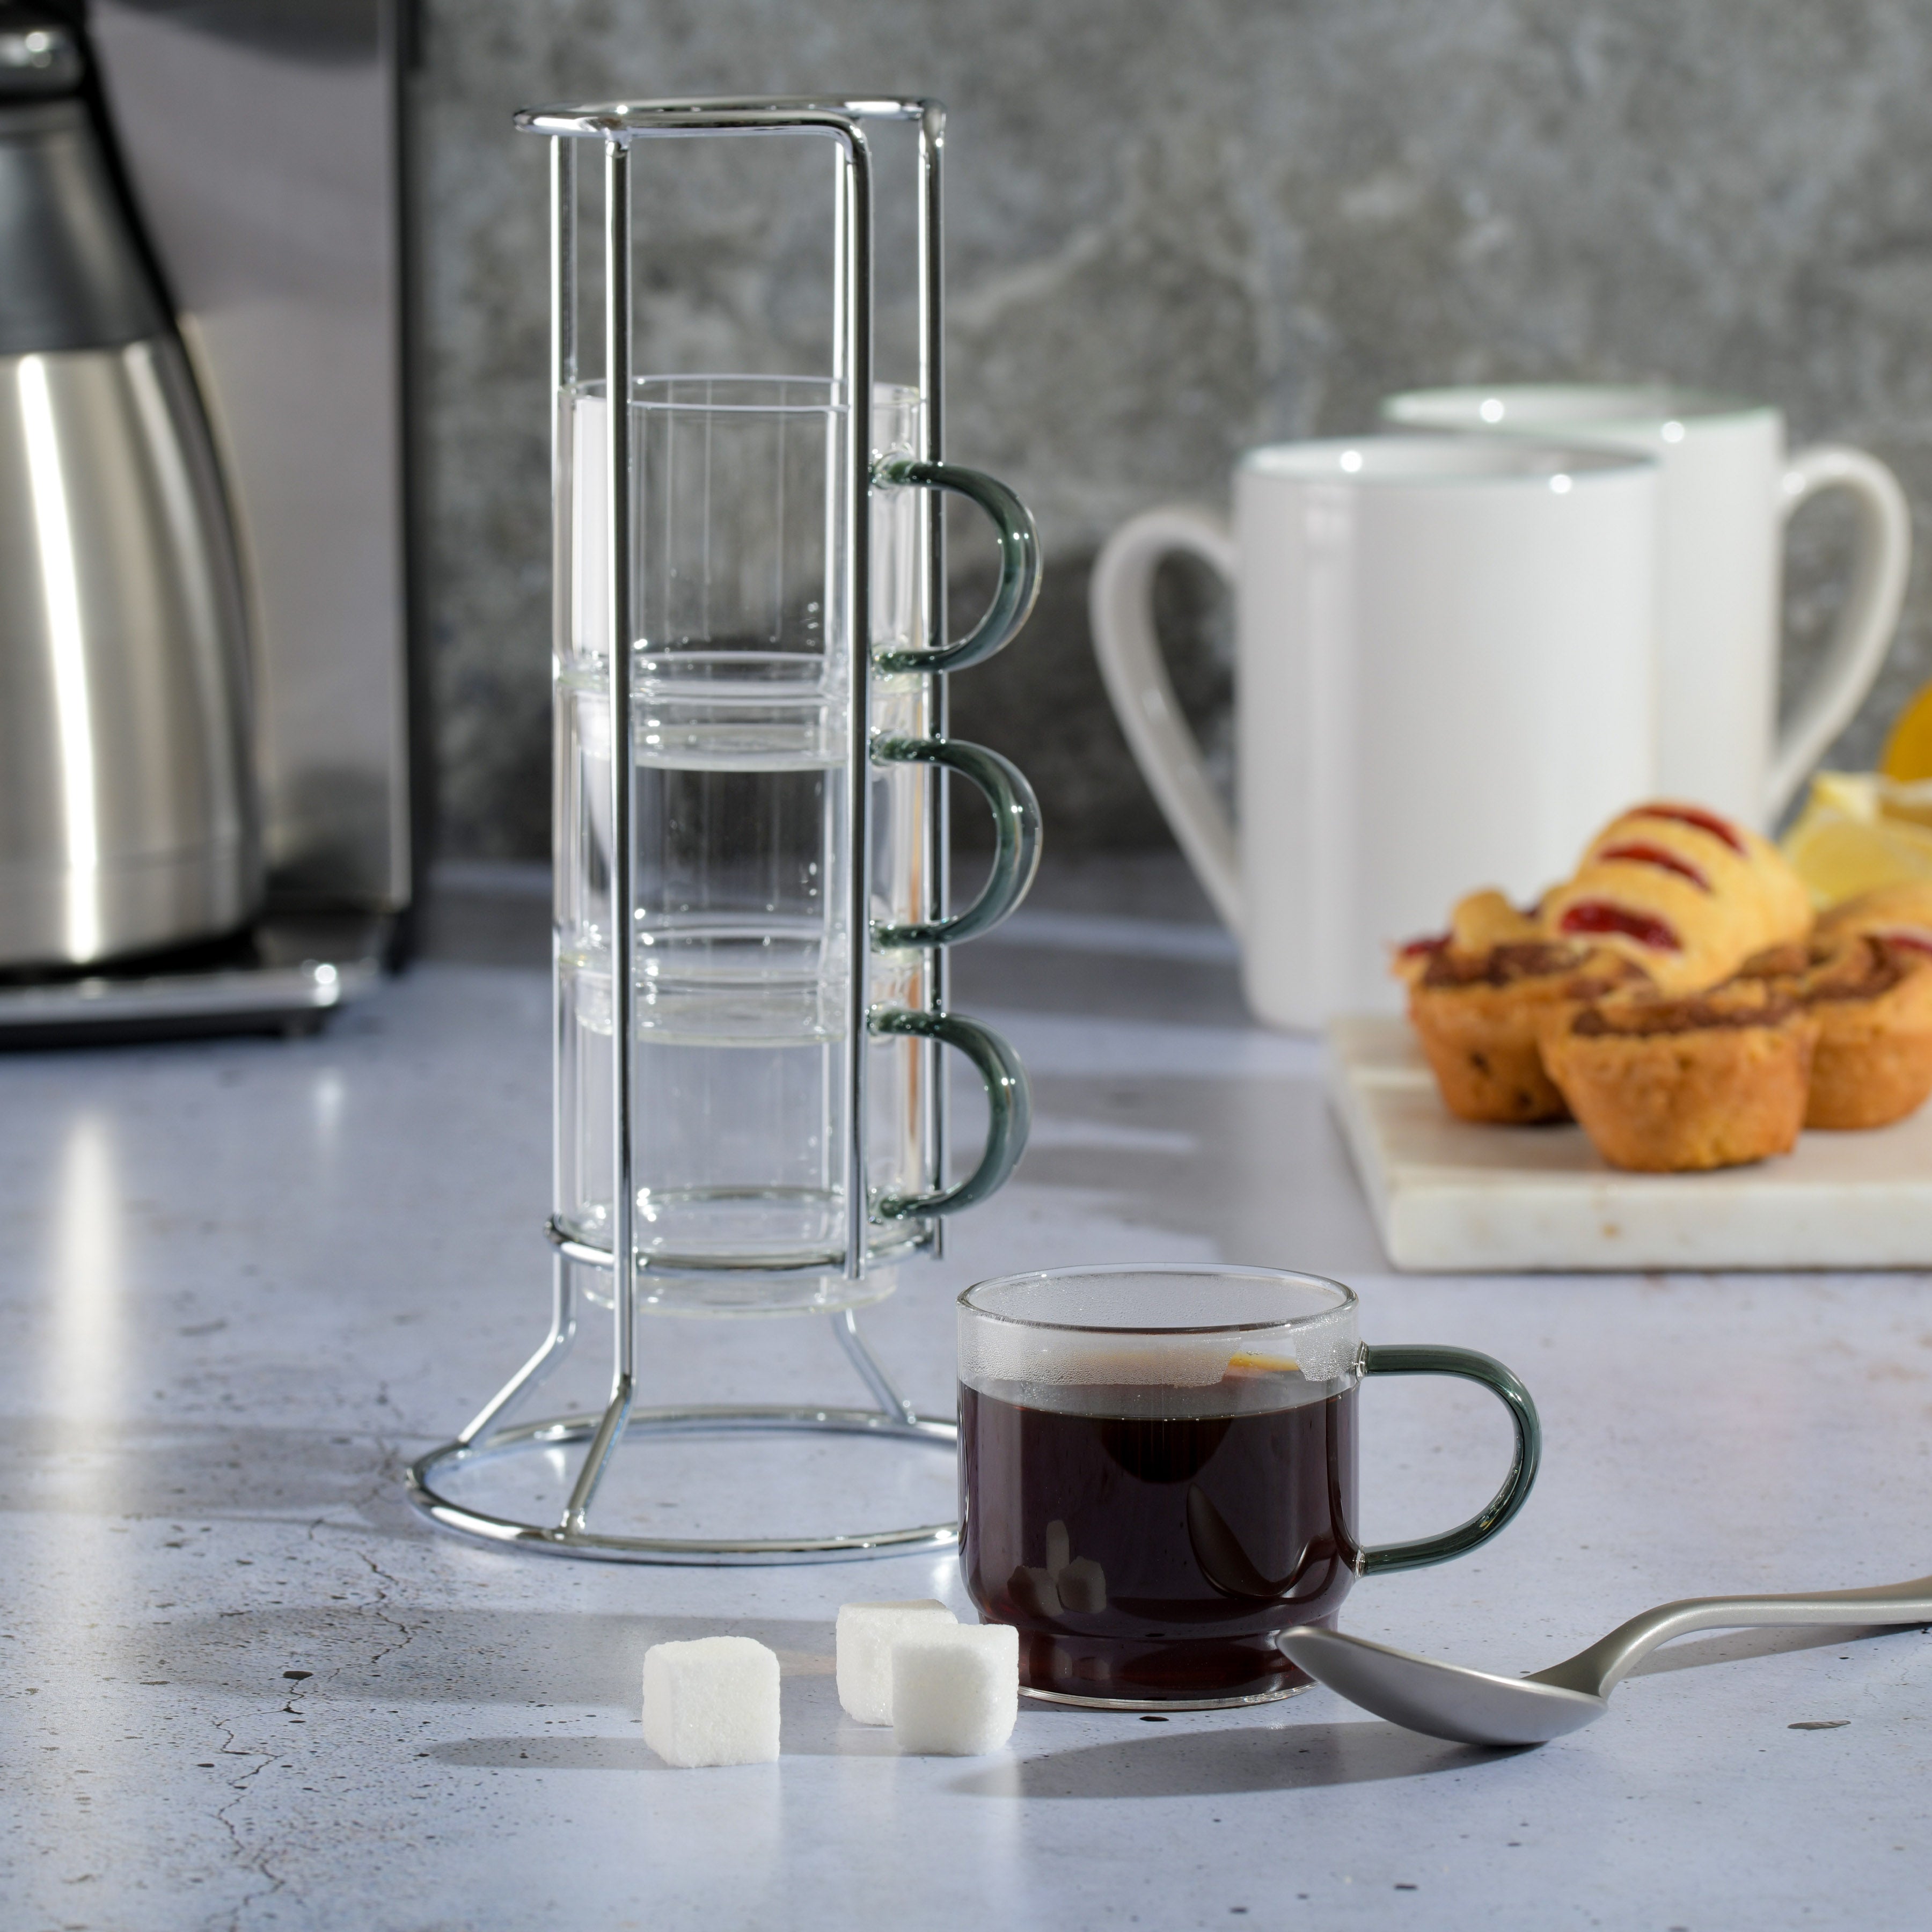 Mugs & Espresso Cups and Sets